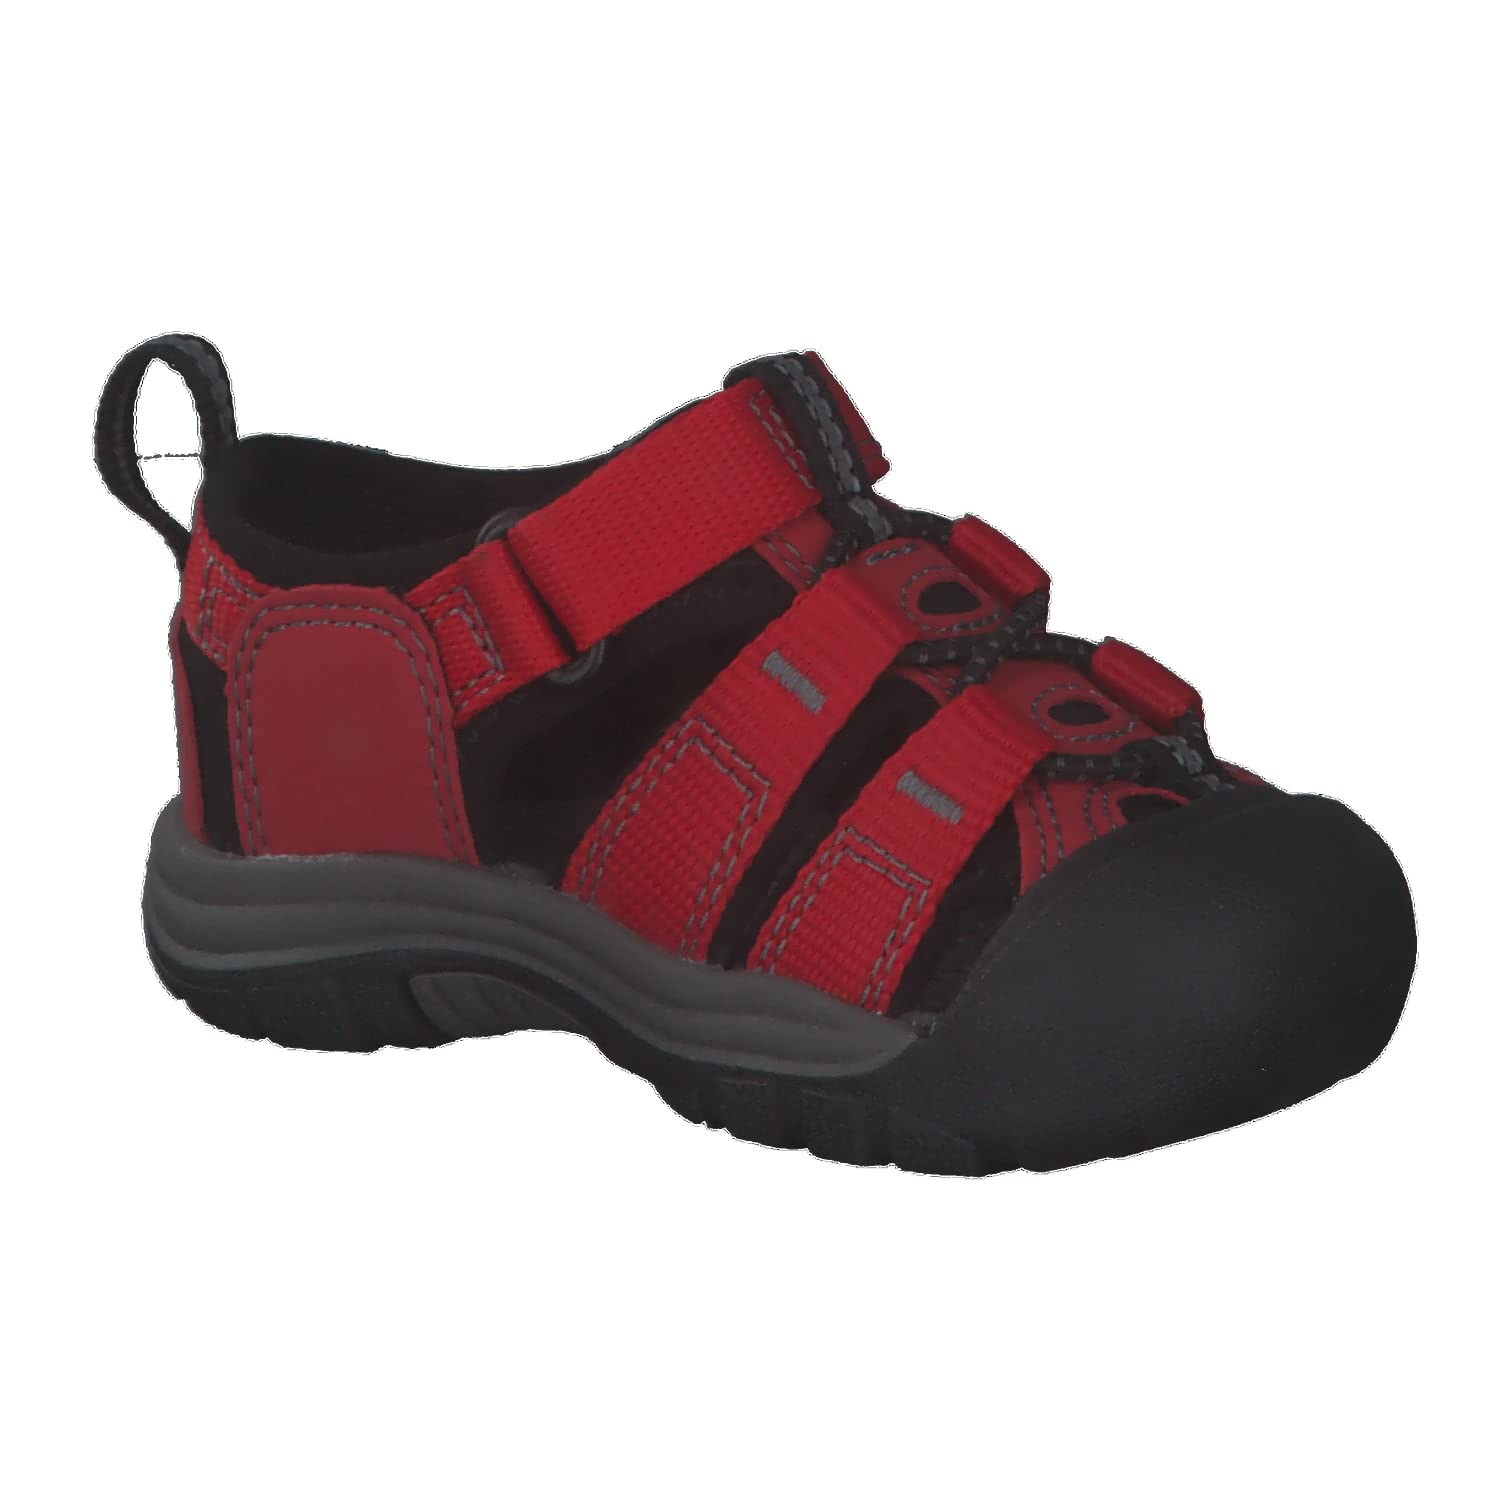 KEEN Boy's Newport H2 Closed Toe Sport Sandal Water Shoe, Ribbon Red/Gargoyle, 4 Toddler